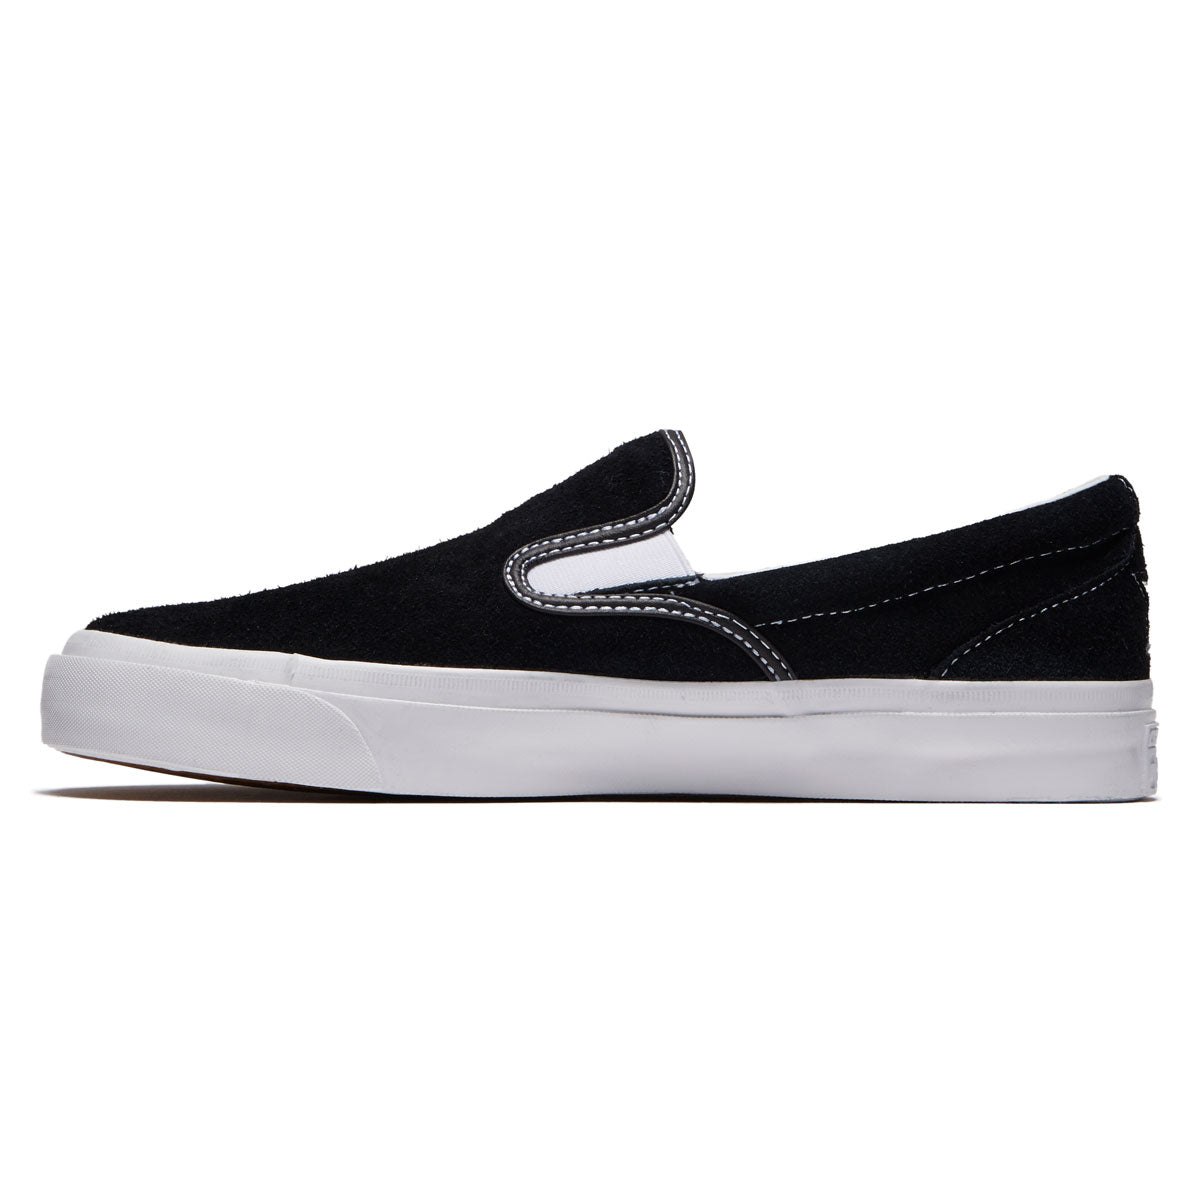 Converse One Star Cc Slip Pro Shoes - Black/White/White CCS